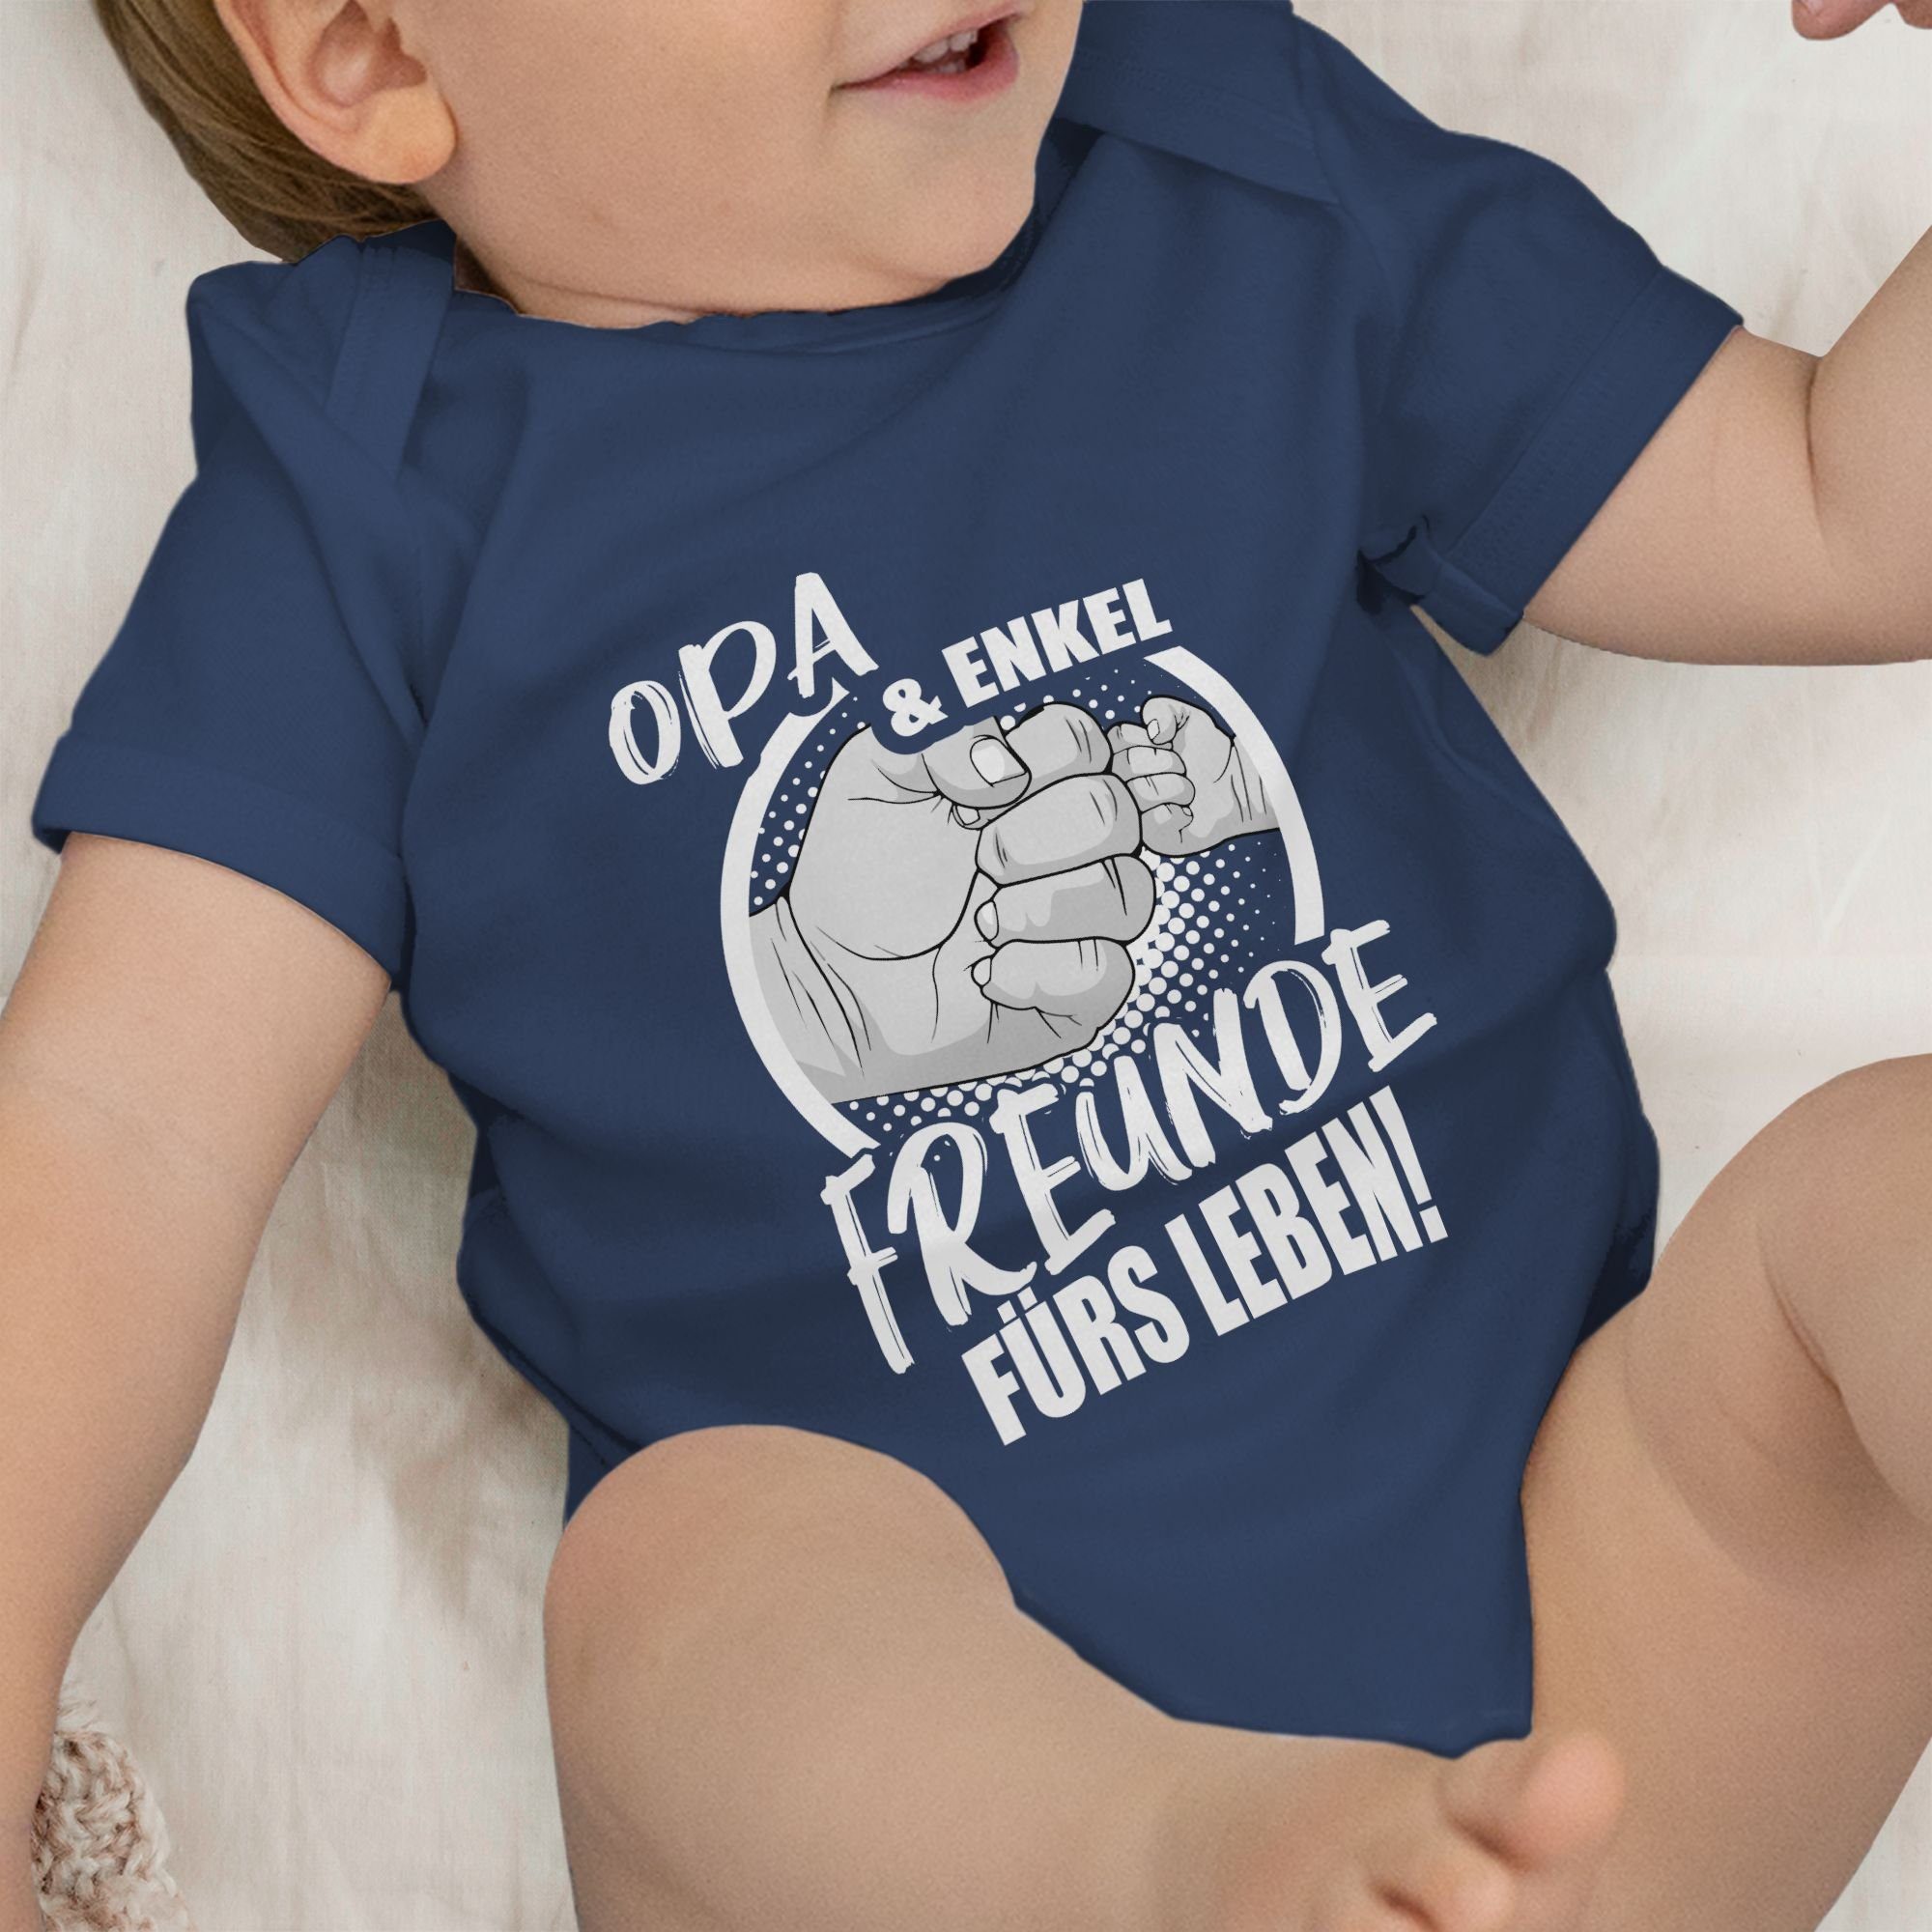 Shirtracer Shirtbody Opa Blau Enkel 2 Navy Baby & Partner-Look Familie fürs Leben! Freunde